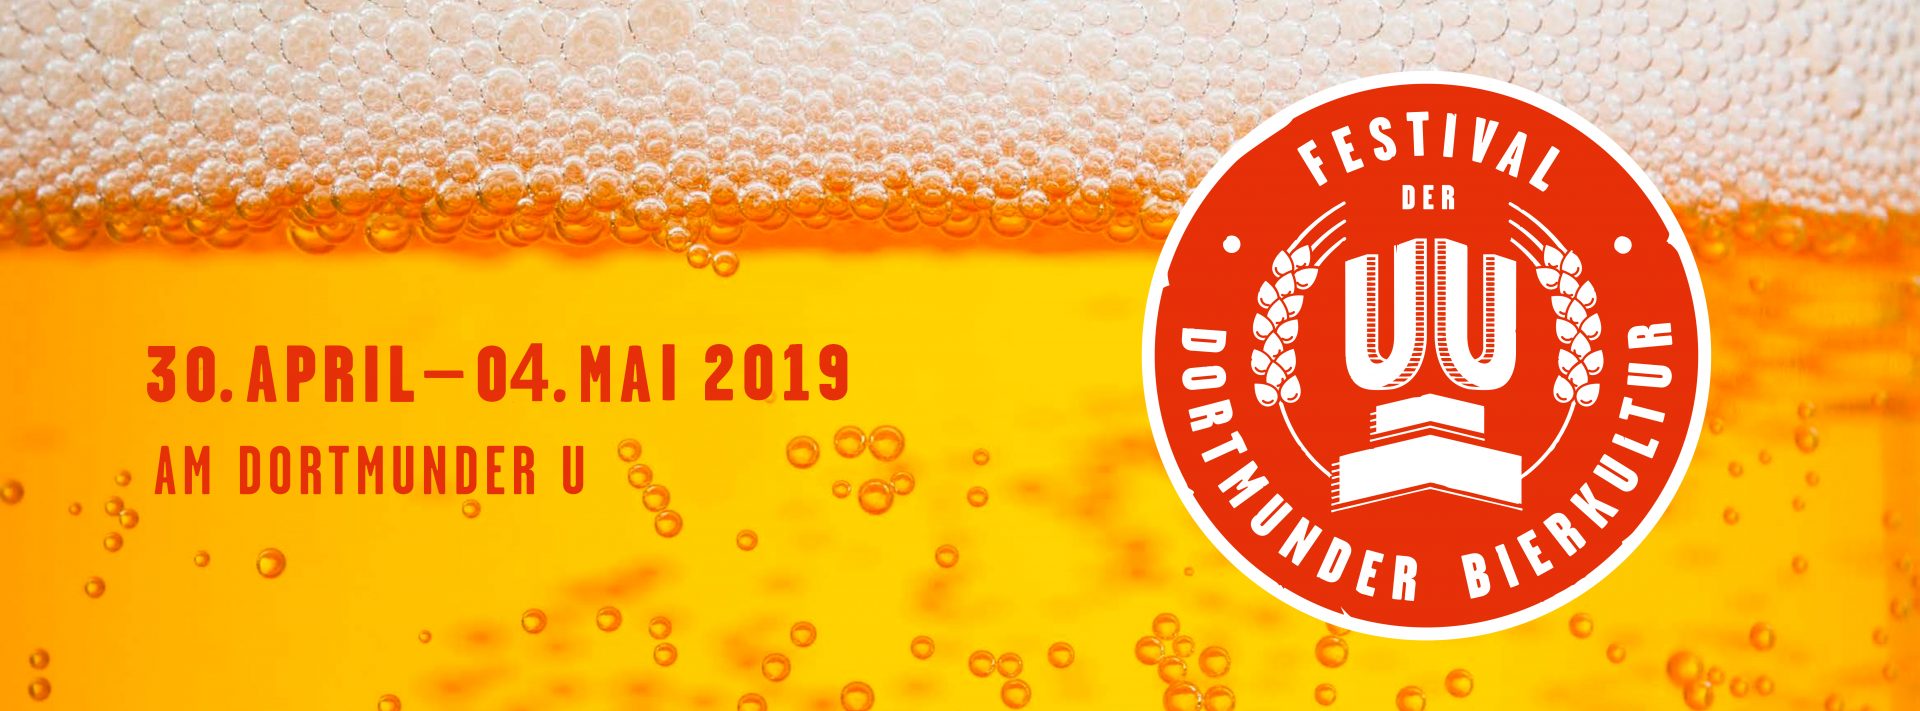 Festival der Dortmunder Bierkultur 2019 &copy; http://www.dortmunder-bierfestival.com